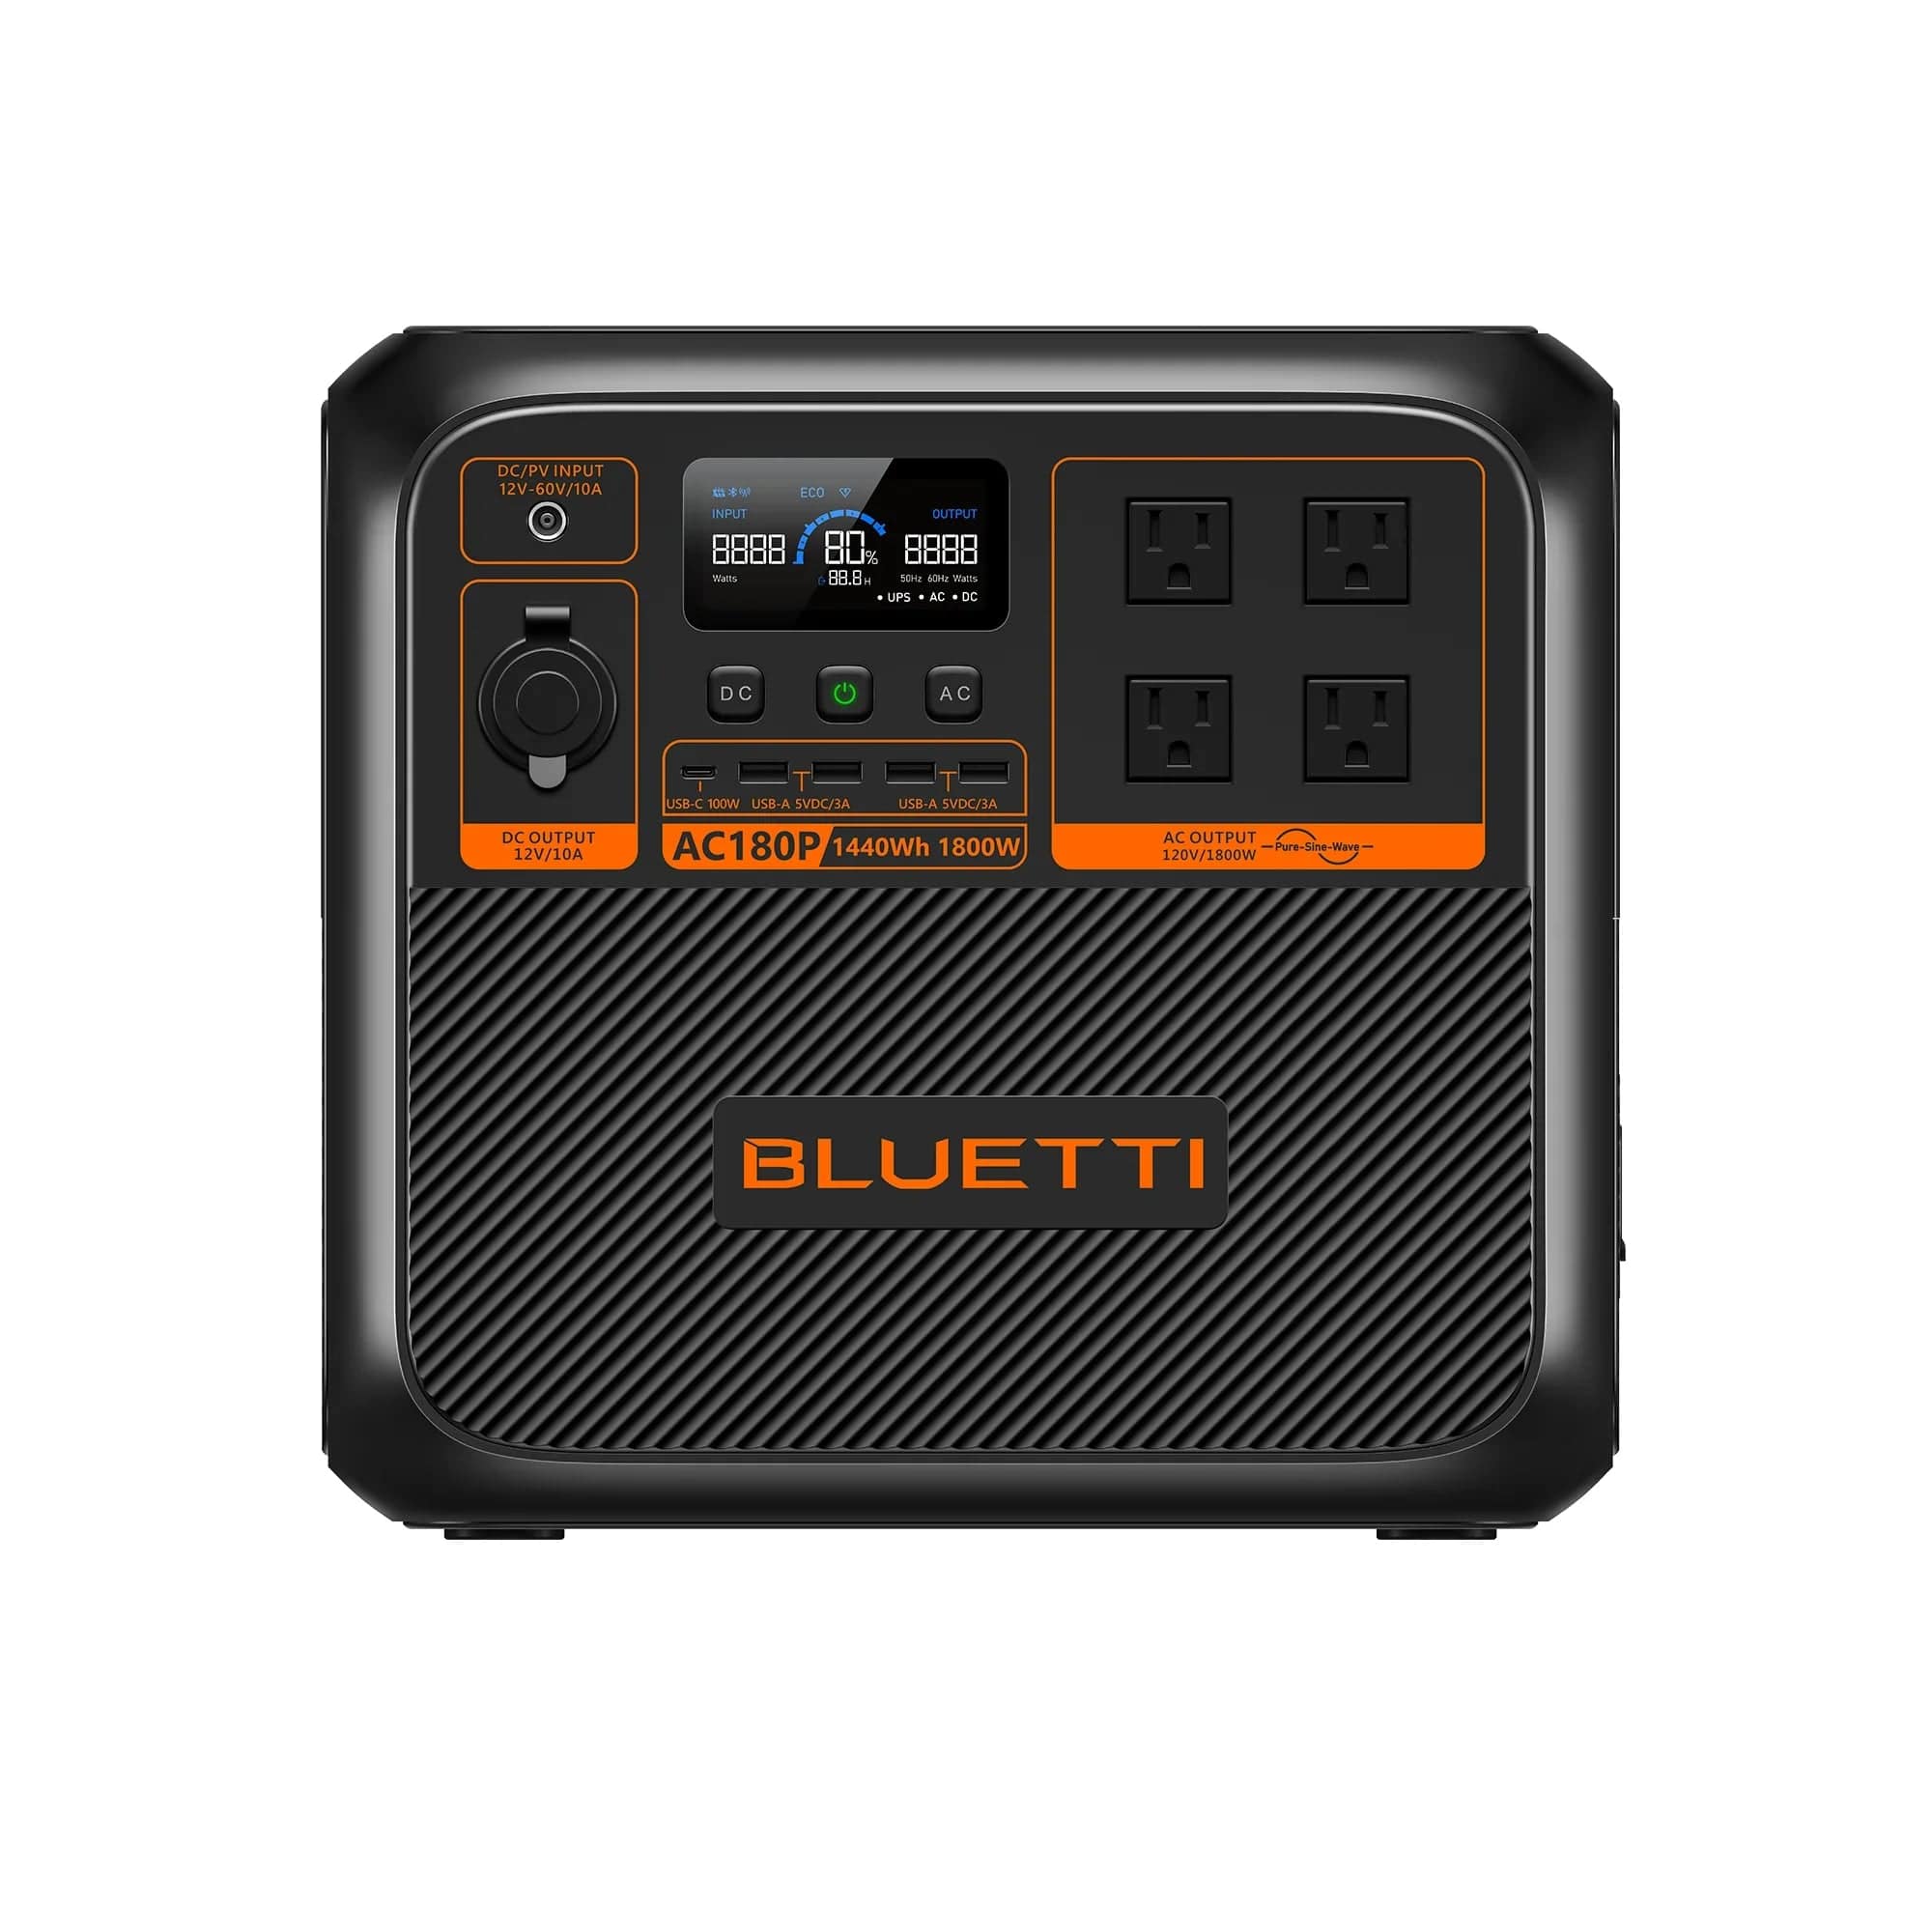 Bluetti Power Station Bluetti AC180P Solar Portable Power Station | 1,800W 1,440Wh